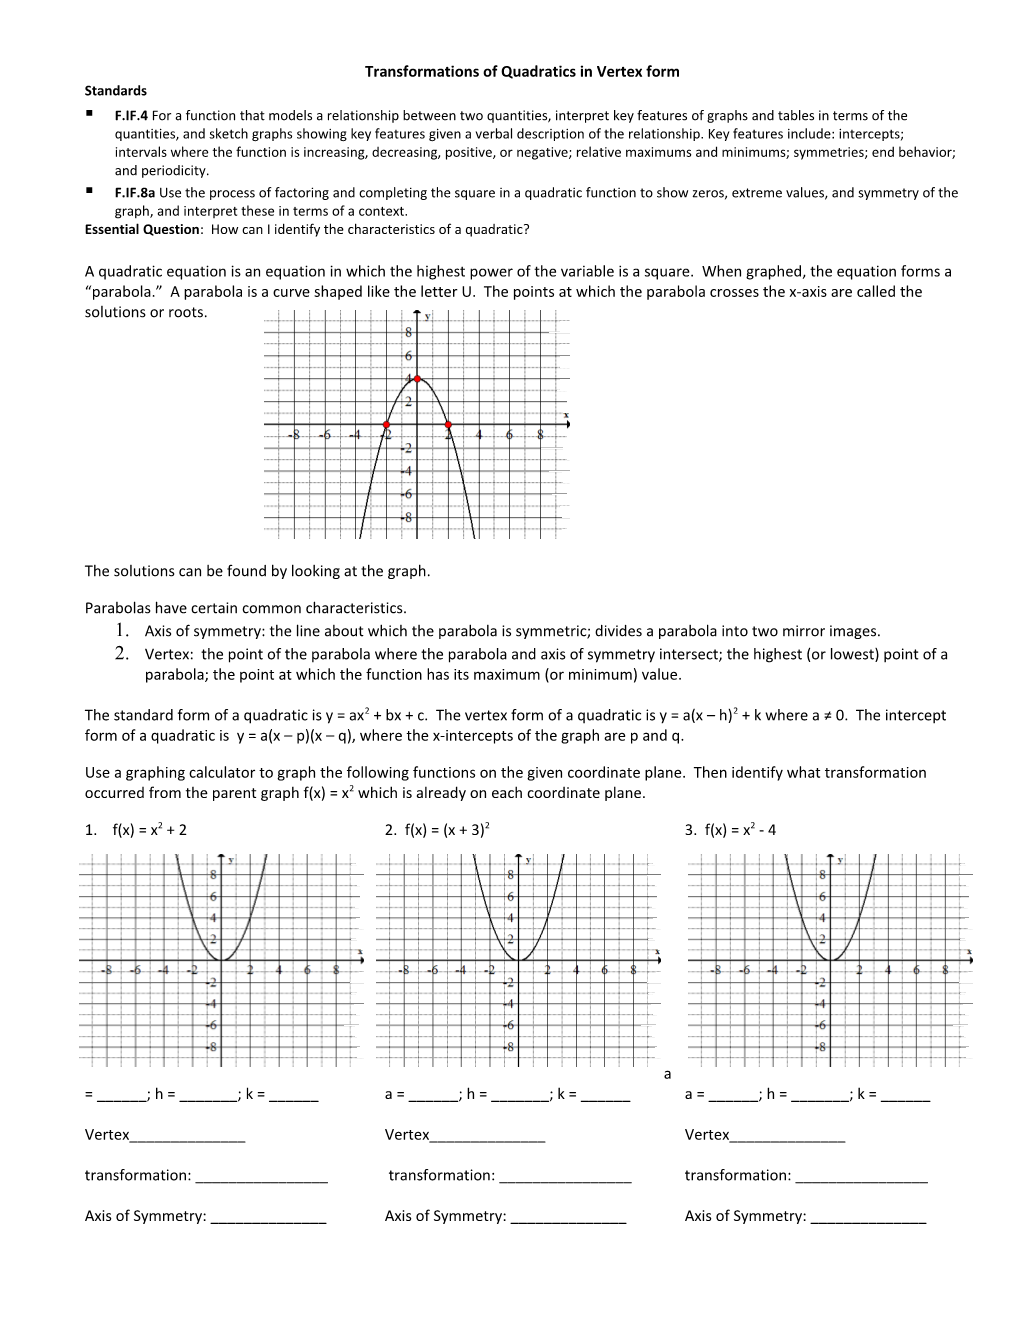 Transformations of Quadratics in Vertex Form